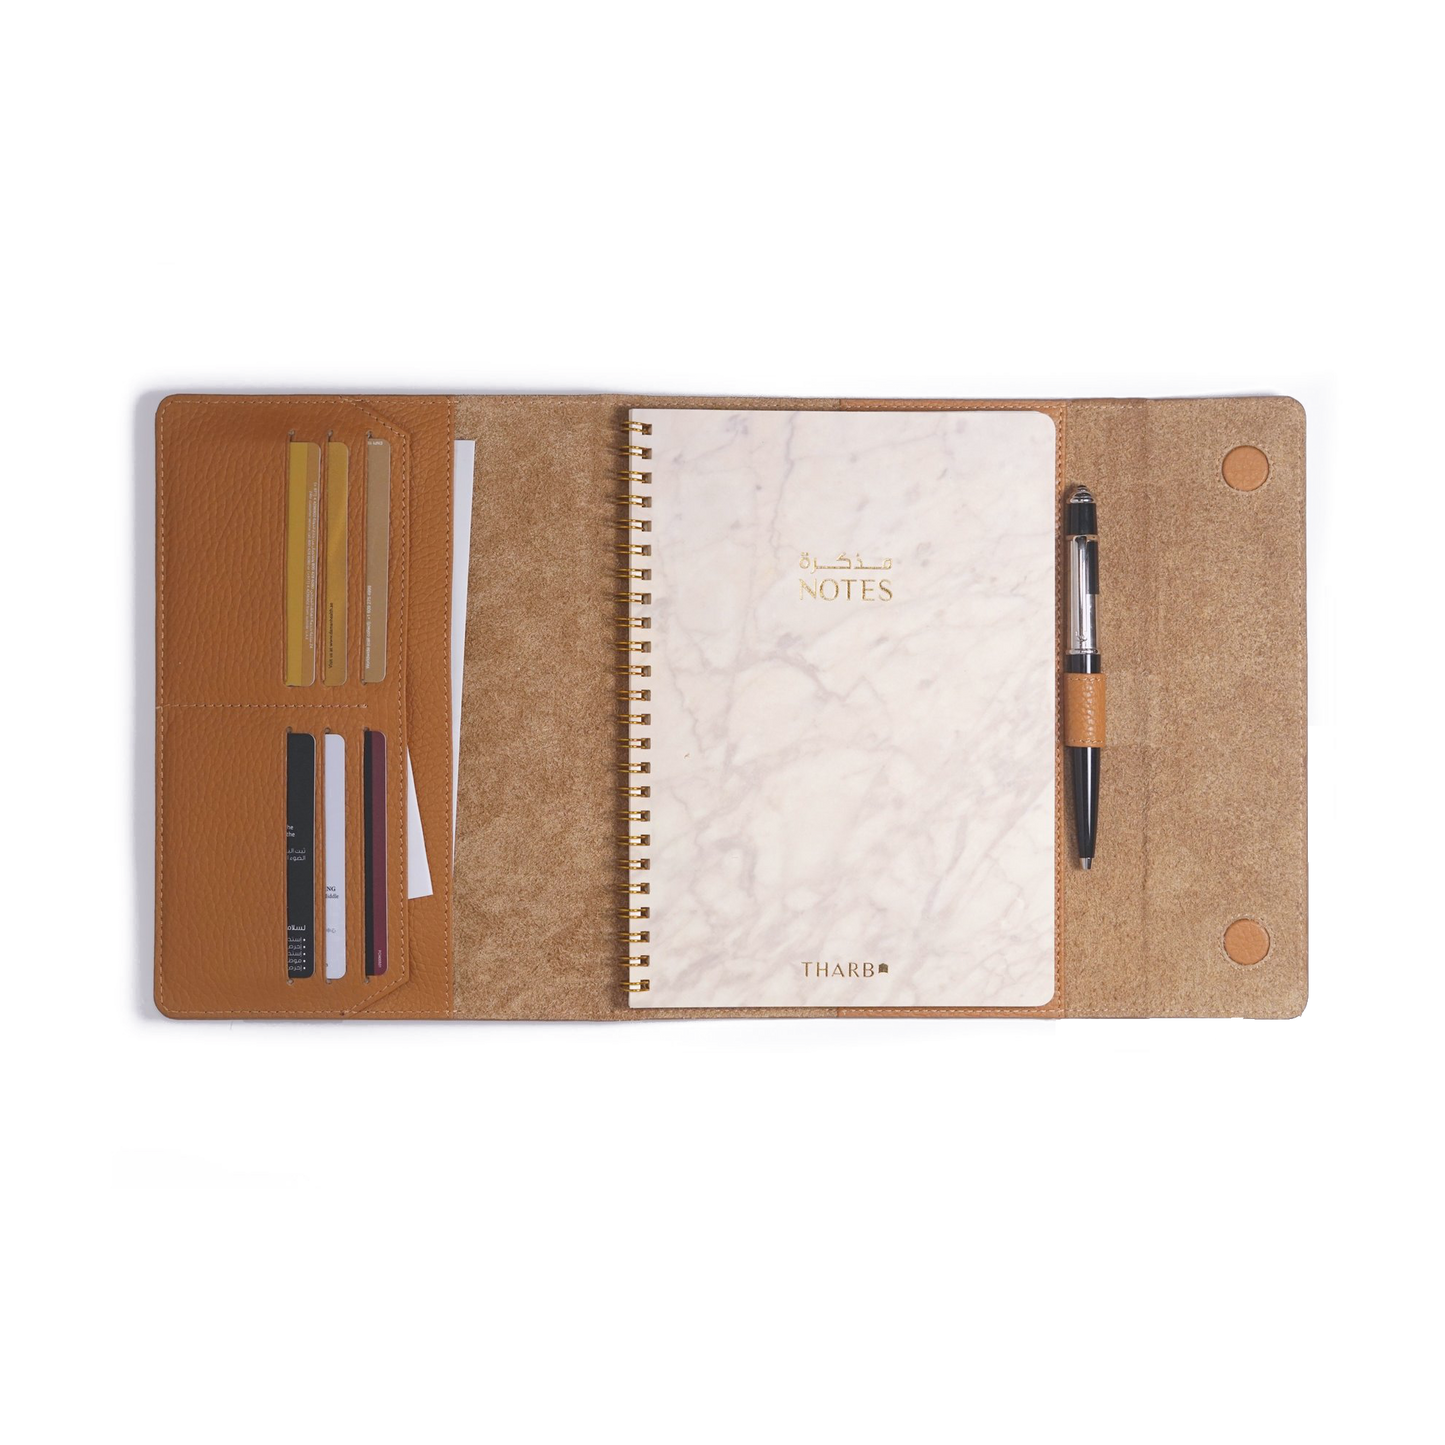 Mayed notebook sleeve